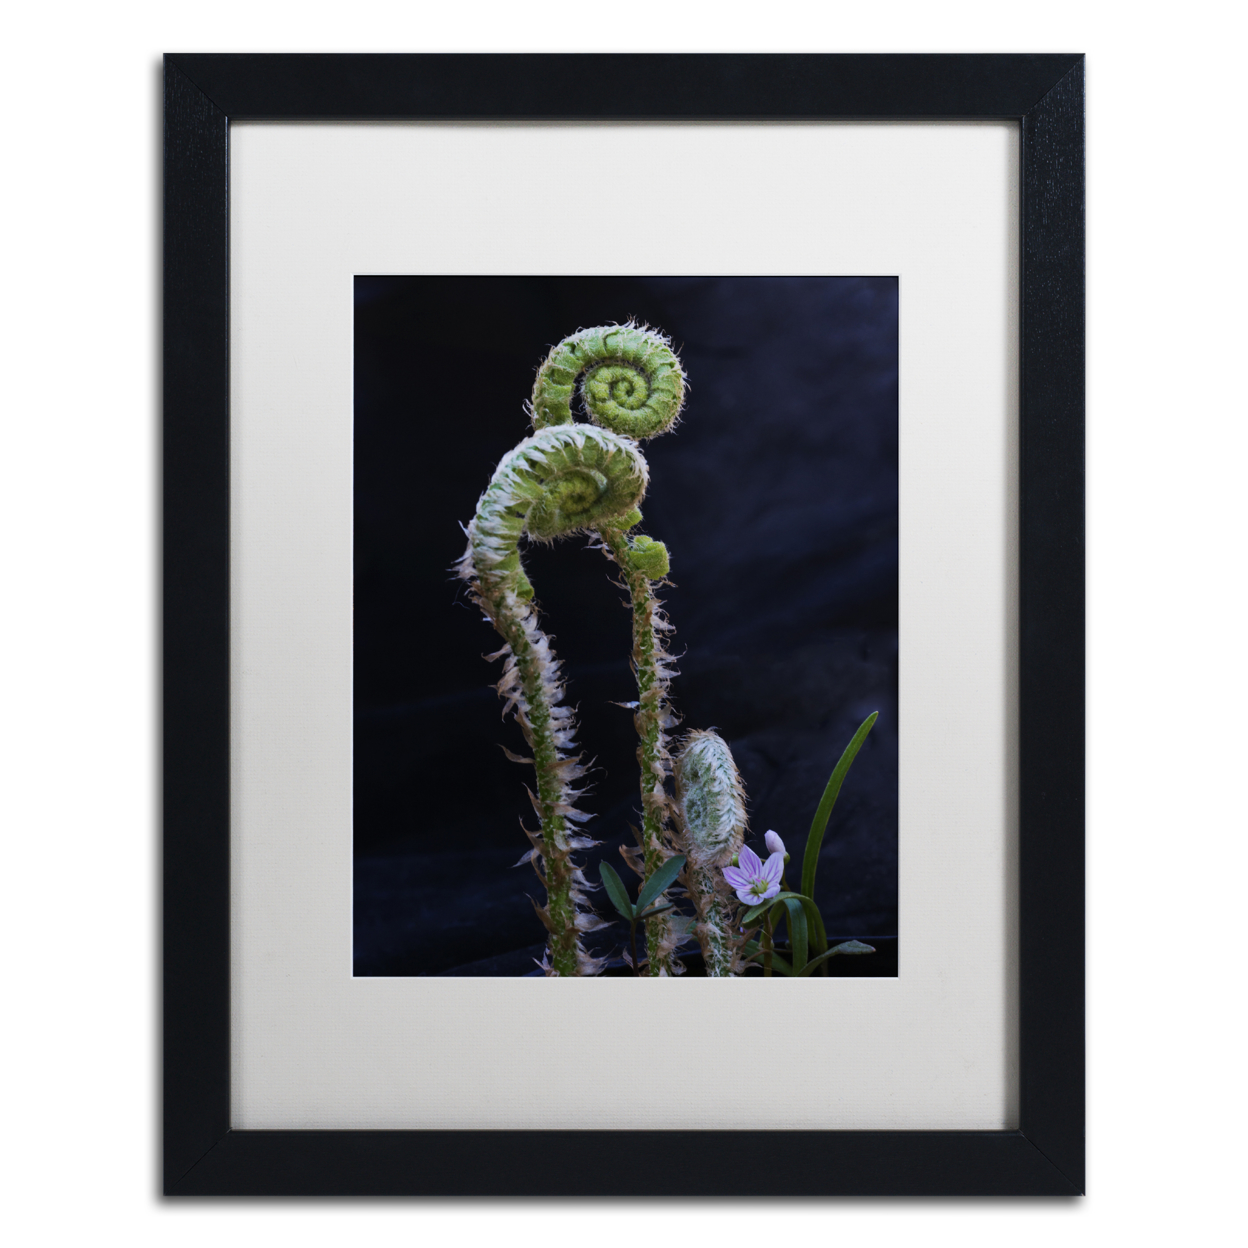 Kurt Shaffer 'Fern And Flower' Black Wooden Framed Art 18 X 22 Inches